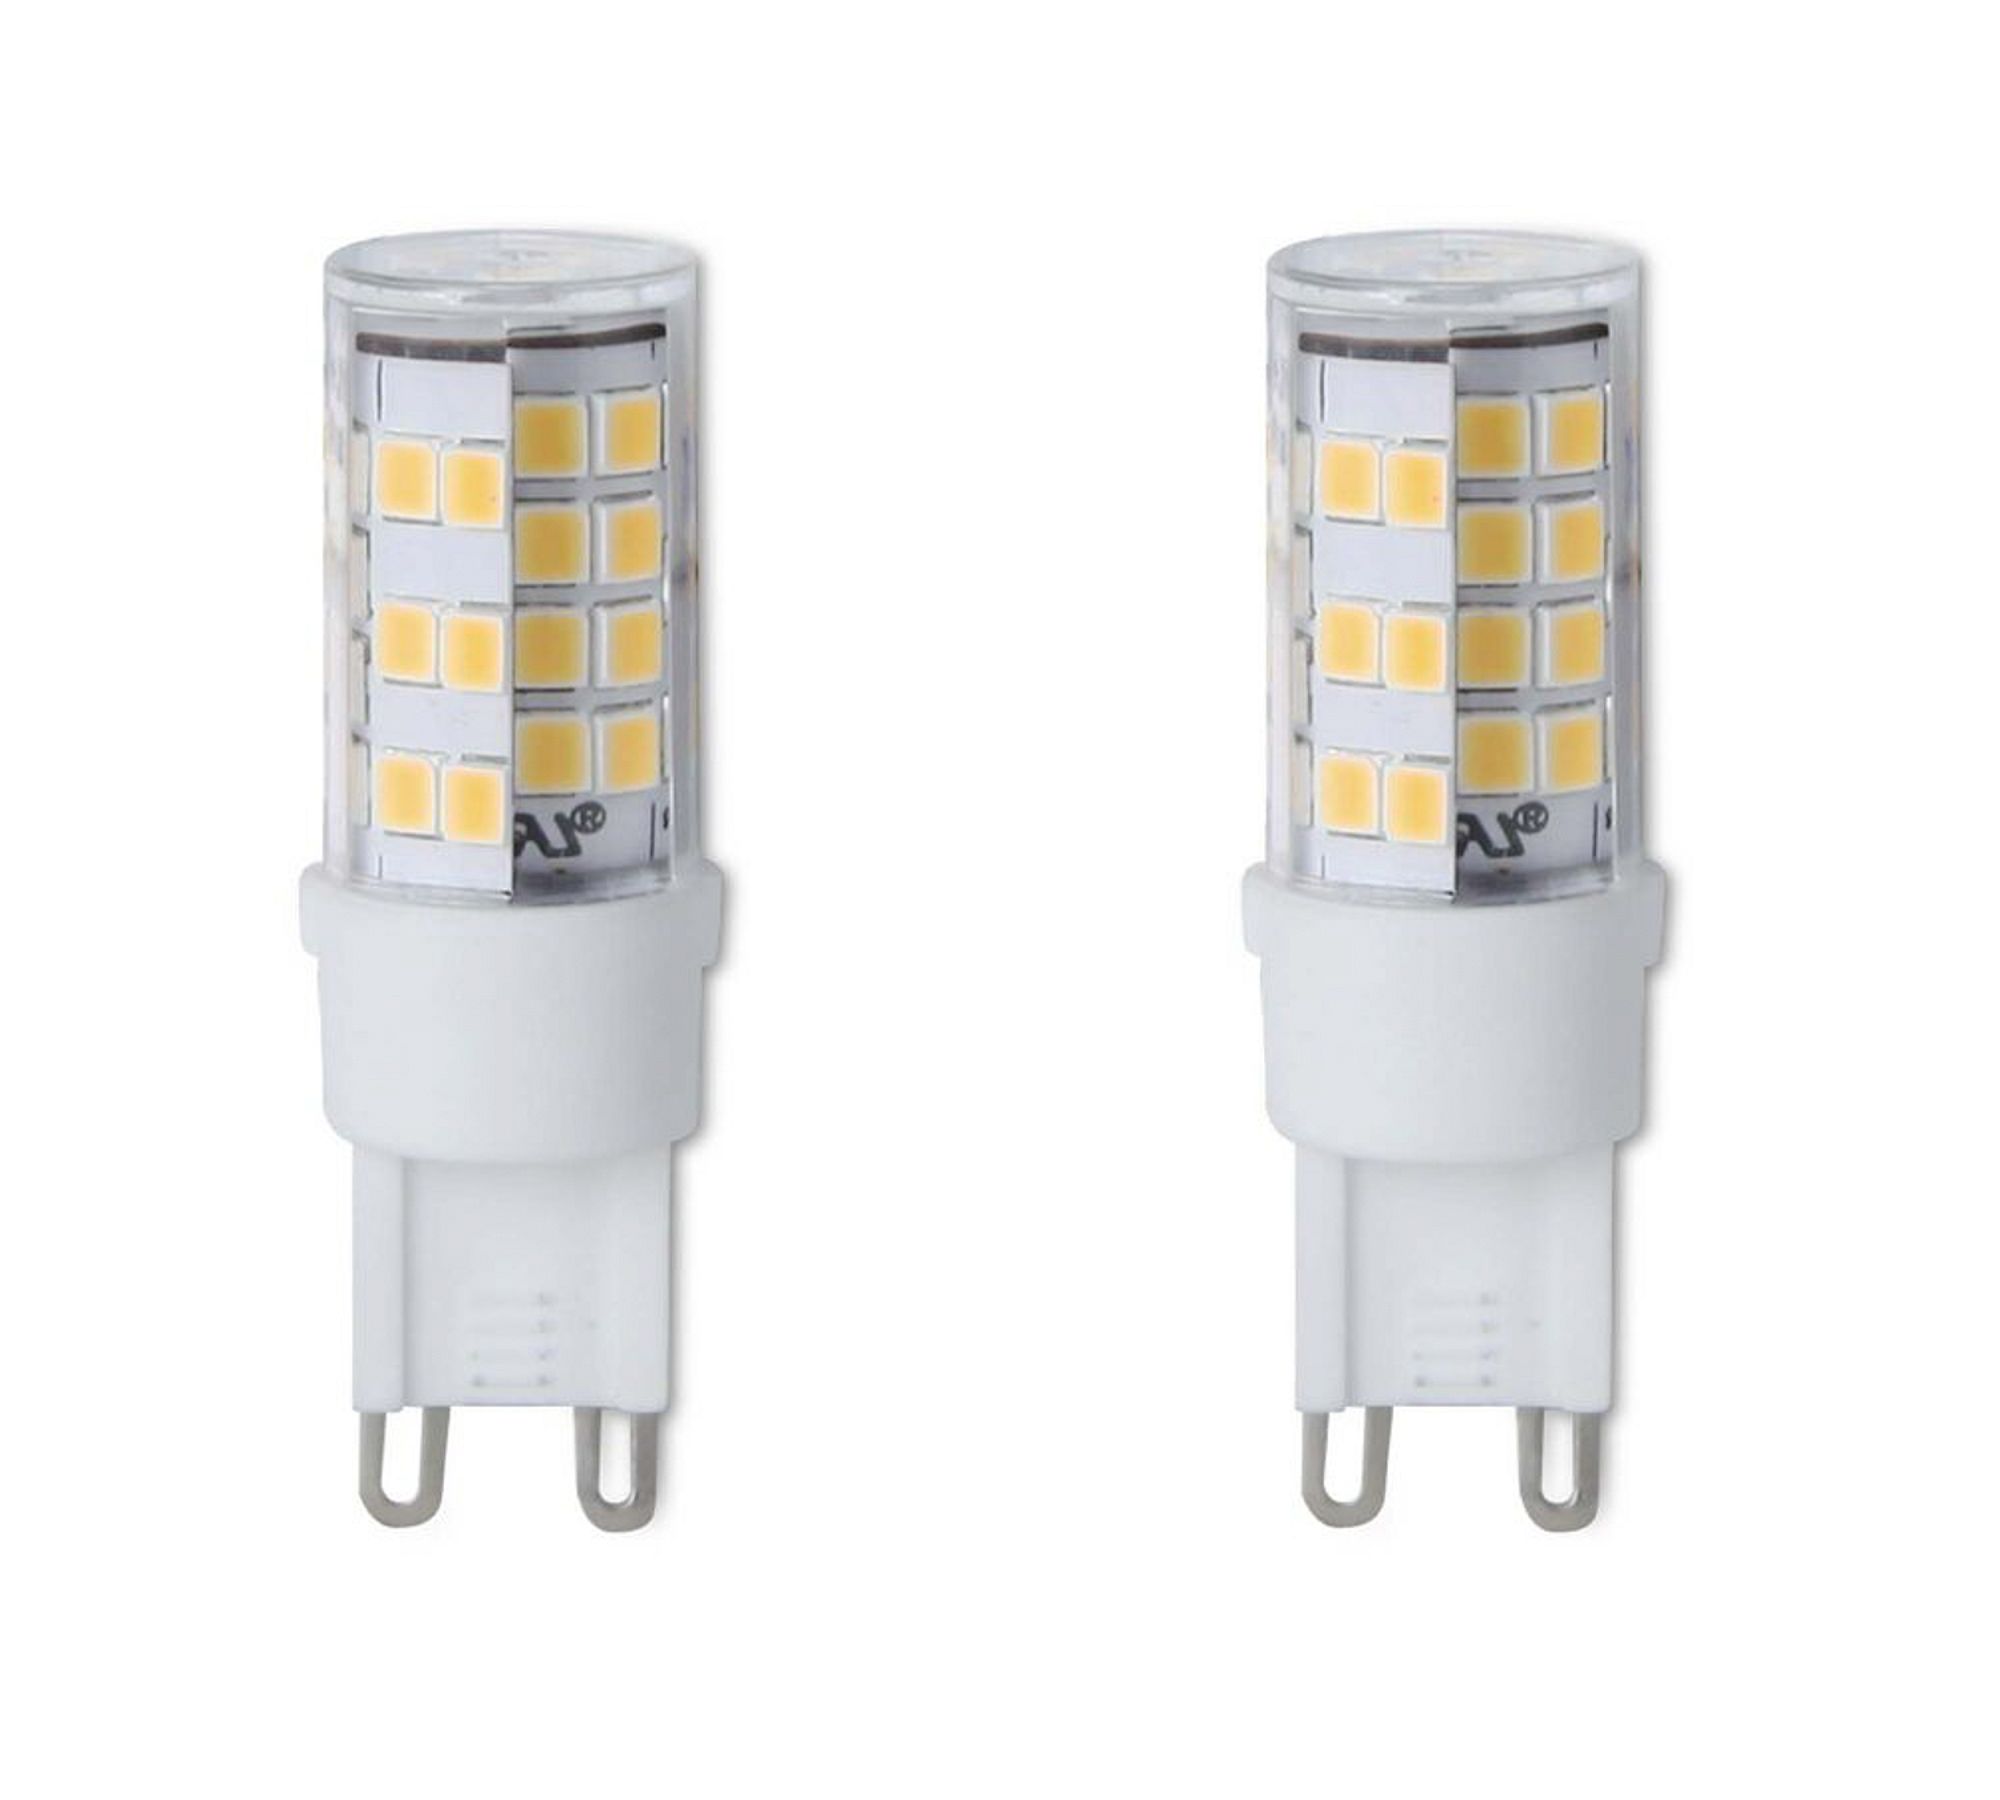 LED 4.5W Clear Bulbs